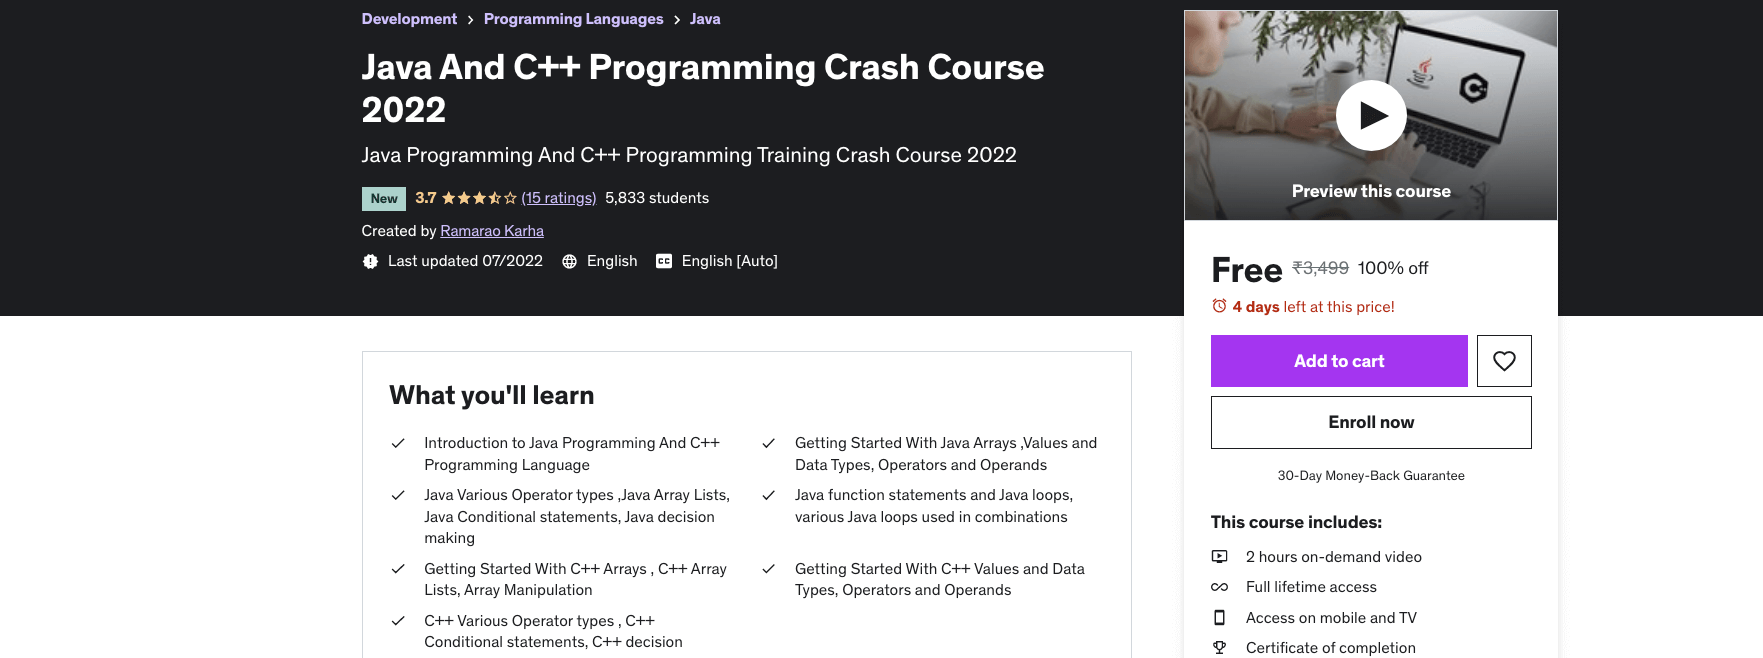 Java And C++ Programming Crash Course 2022